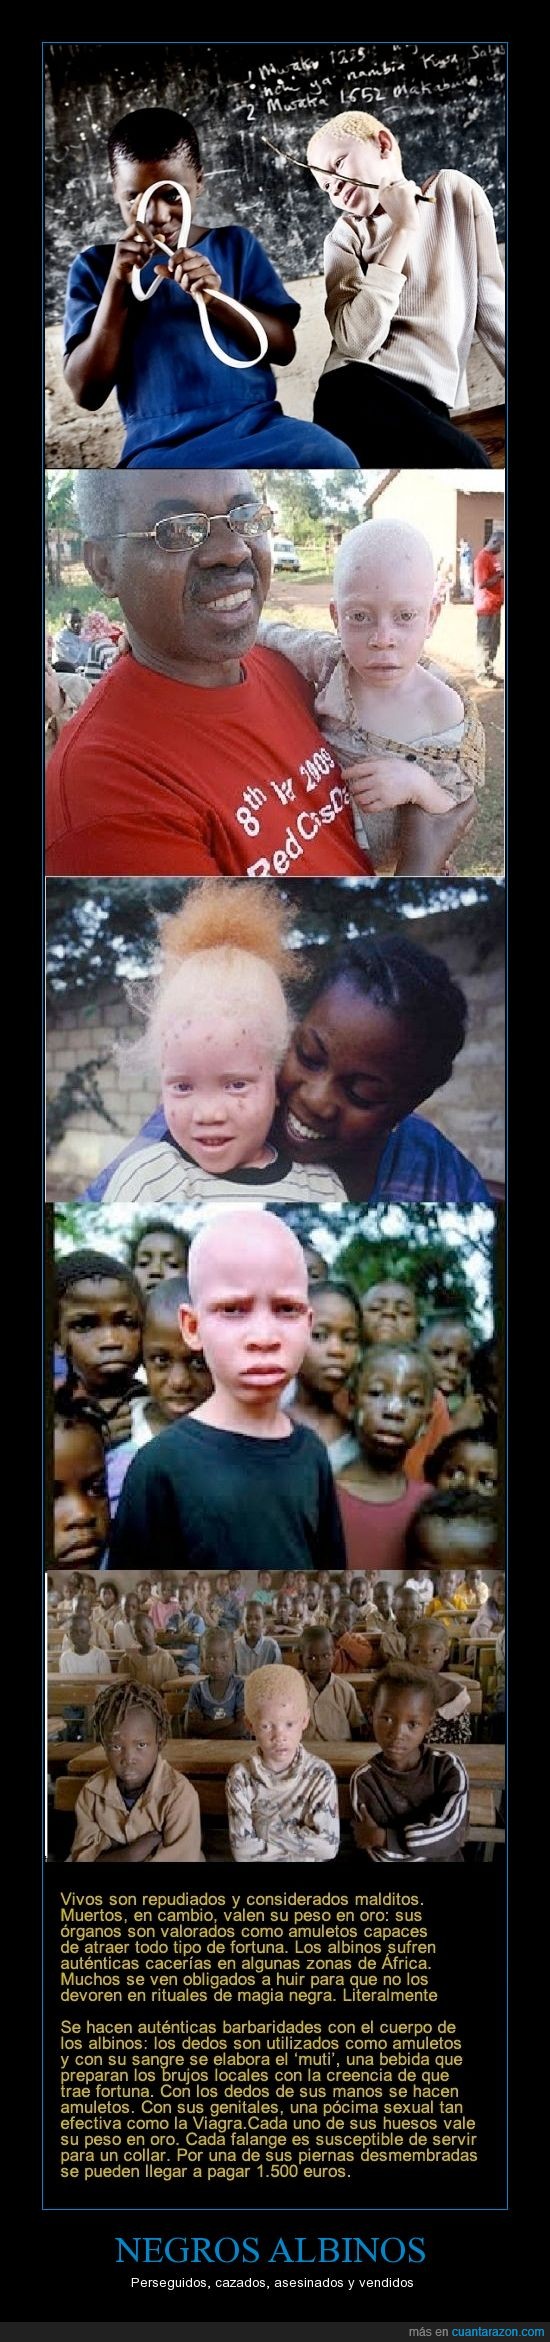 africa,albino,asesino,barbaridad,color,falange,fertilidad,melanina,muti,negro,pocima,pocion,viagra